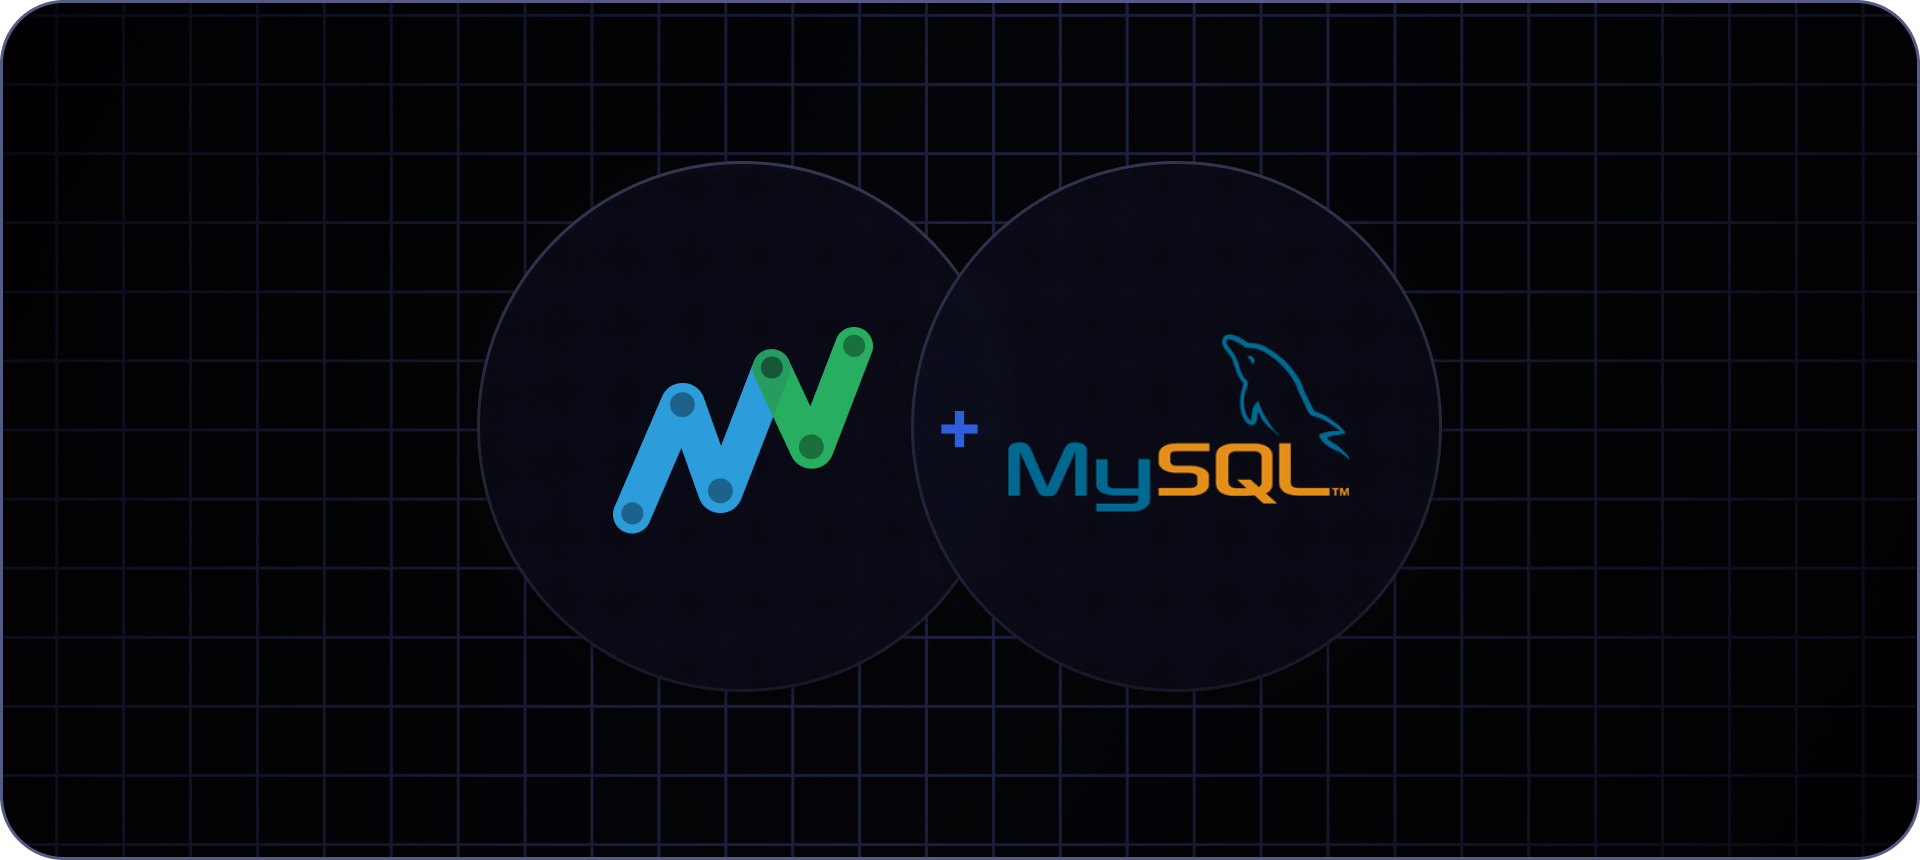 Launch update: MySQL integration